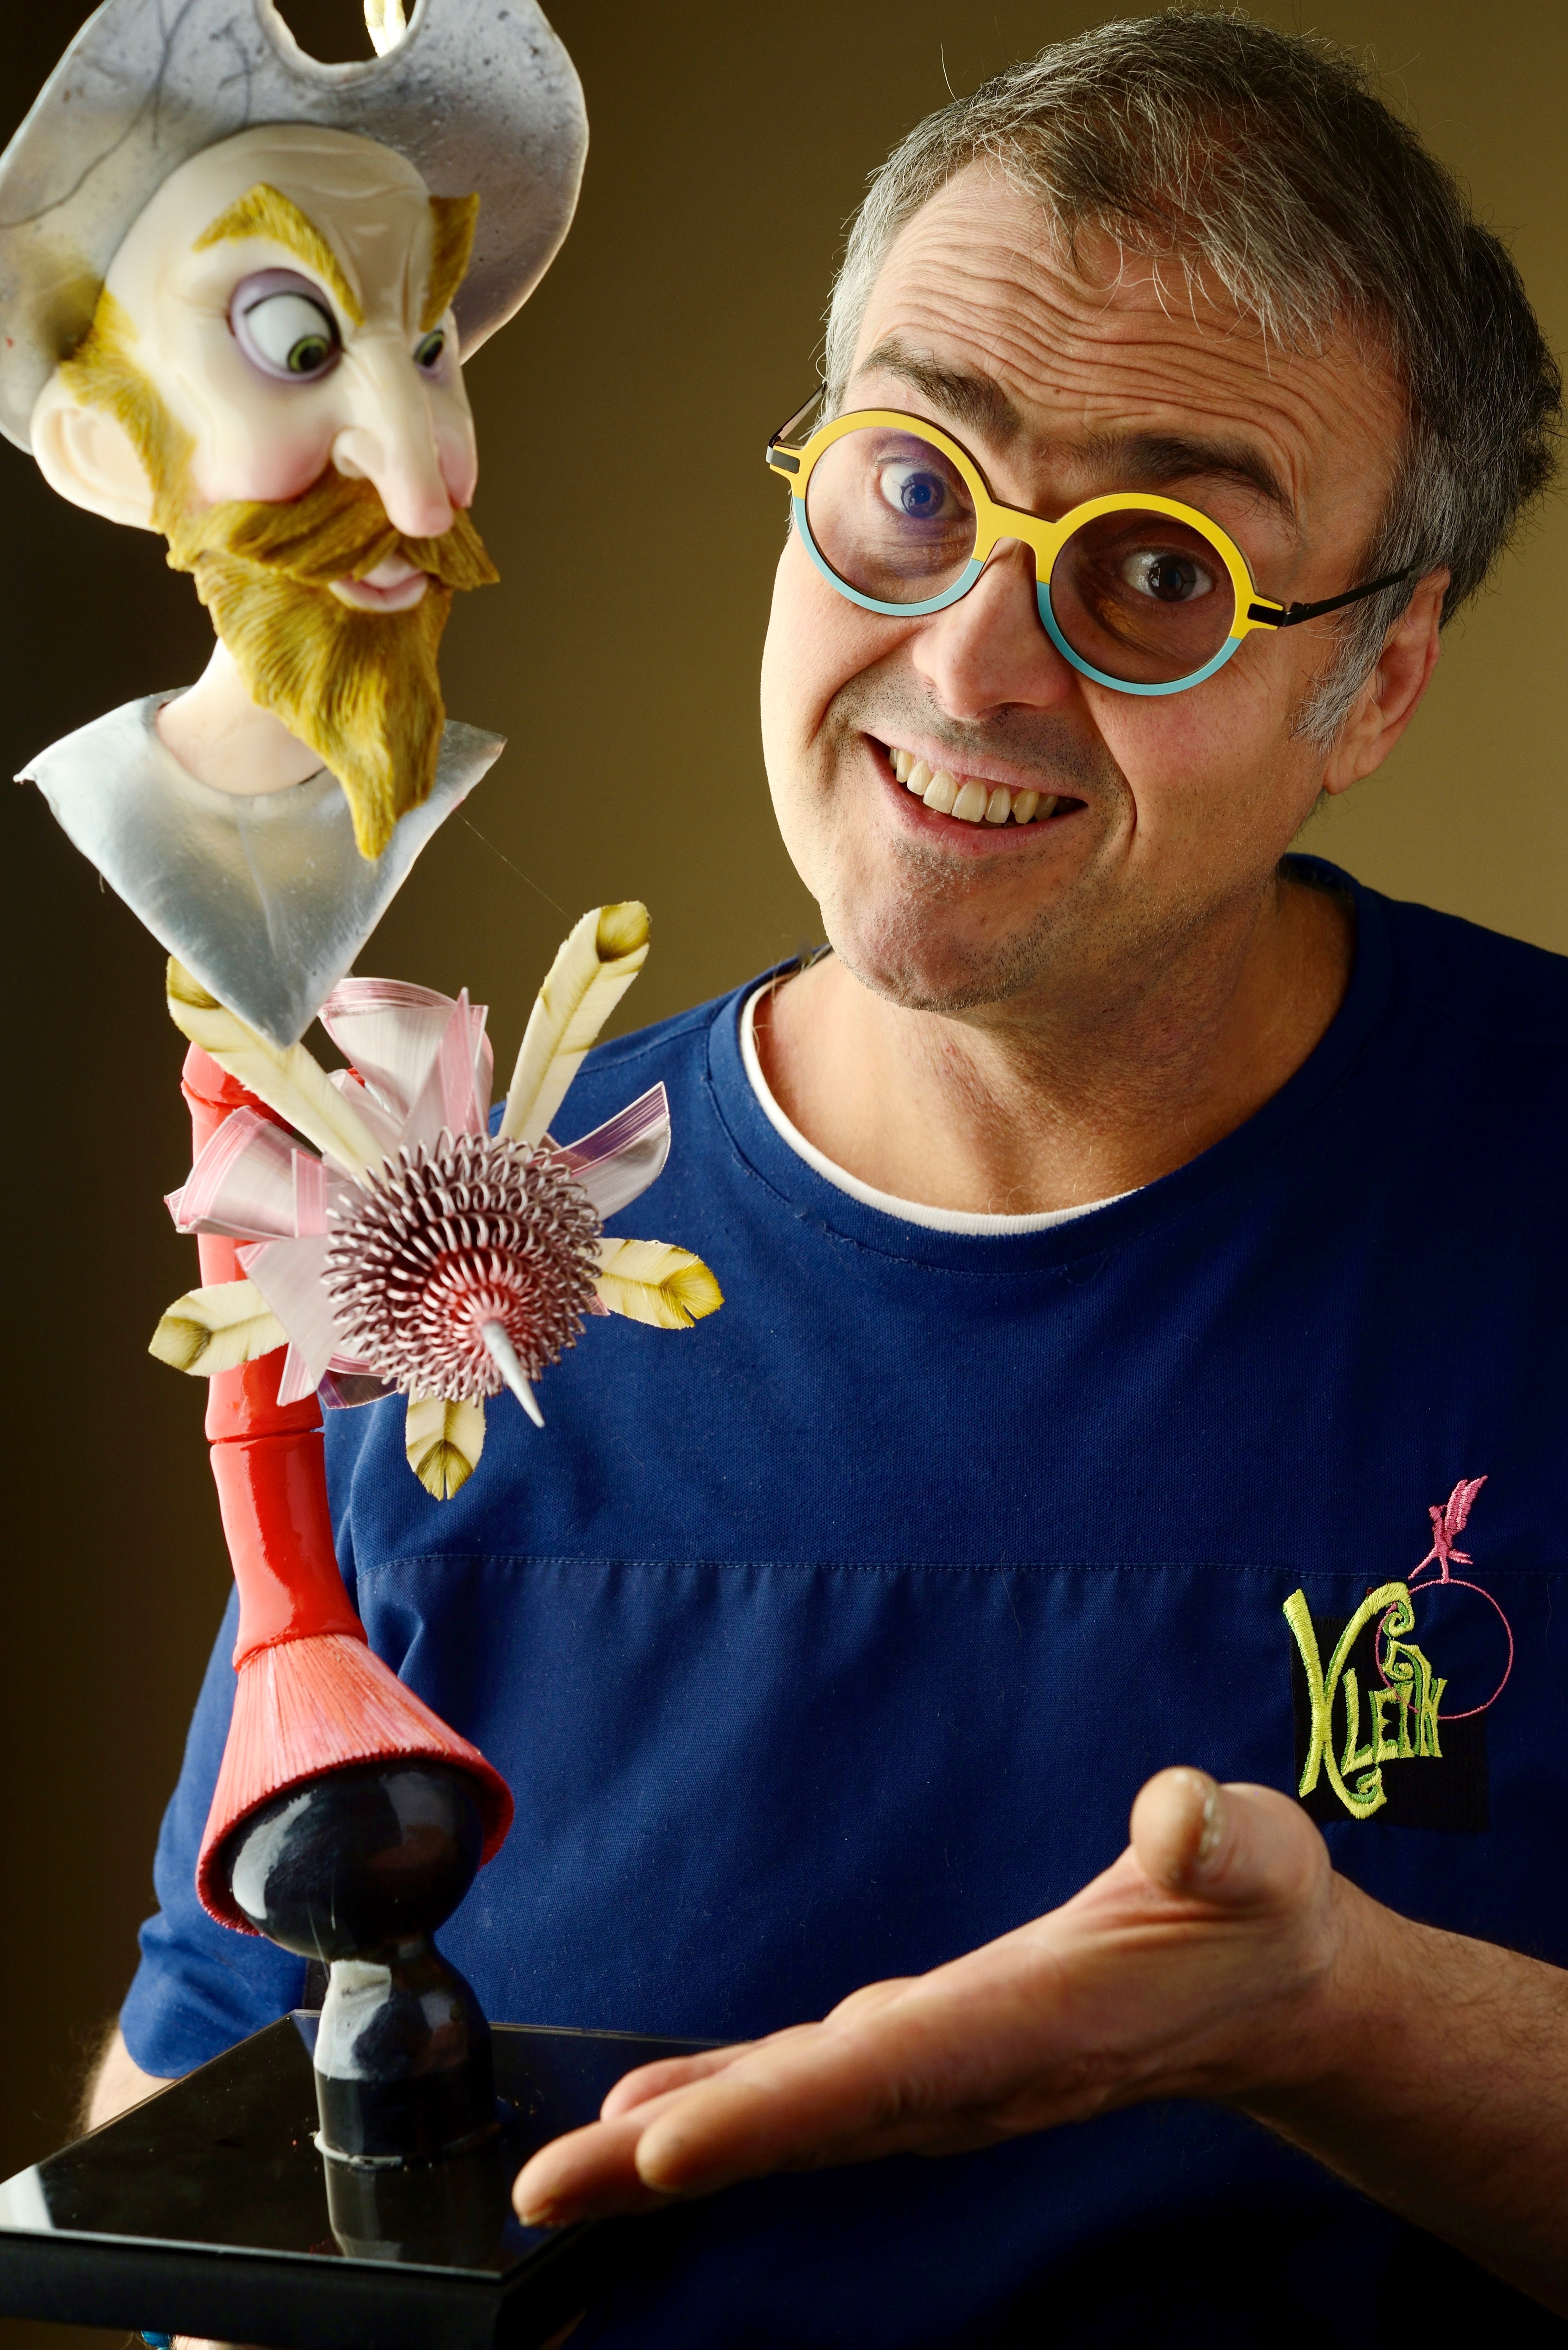 Stephane Kelin with a sugar sculpture